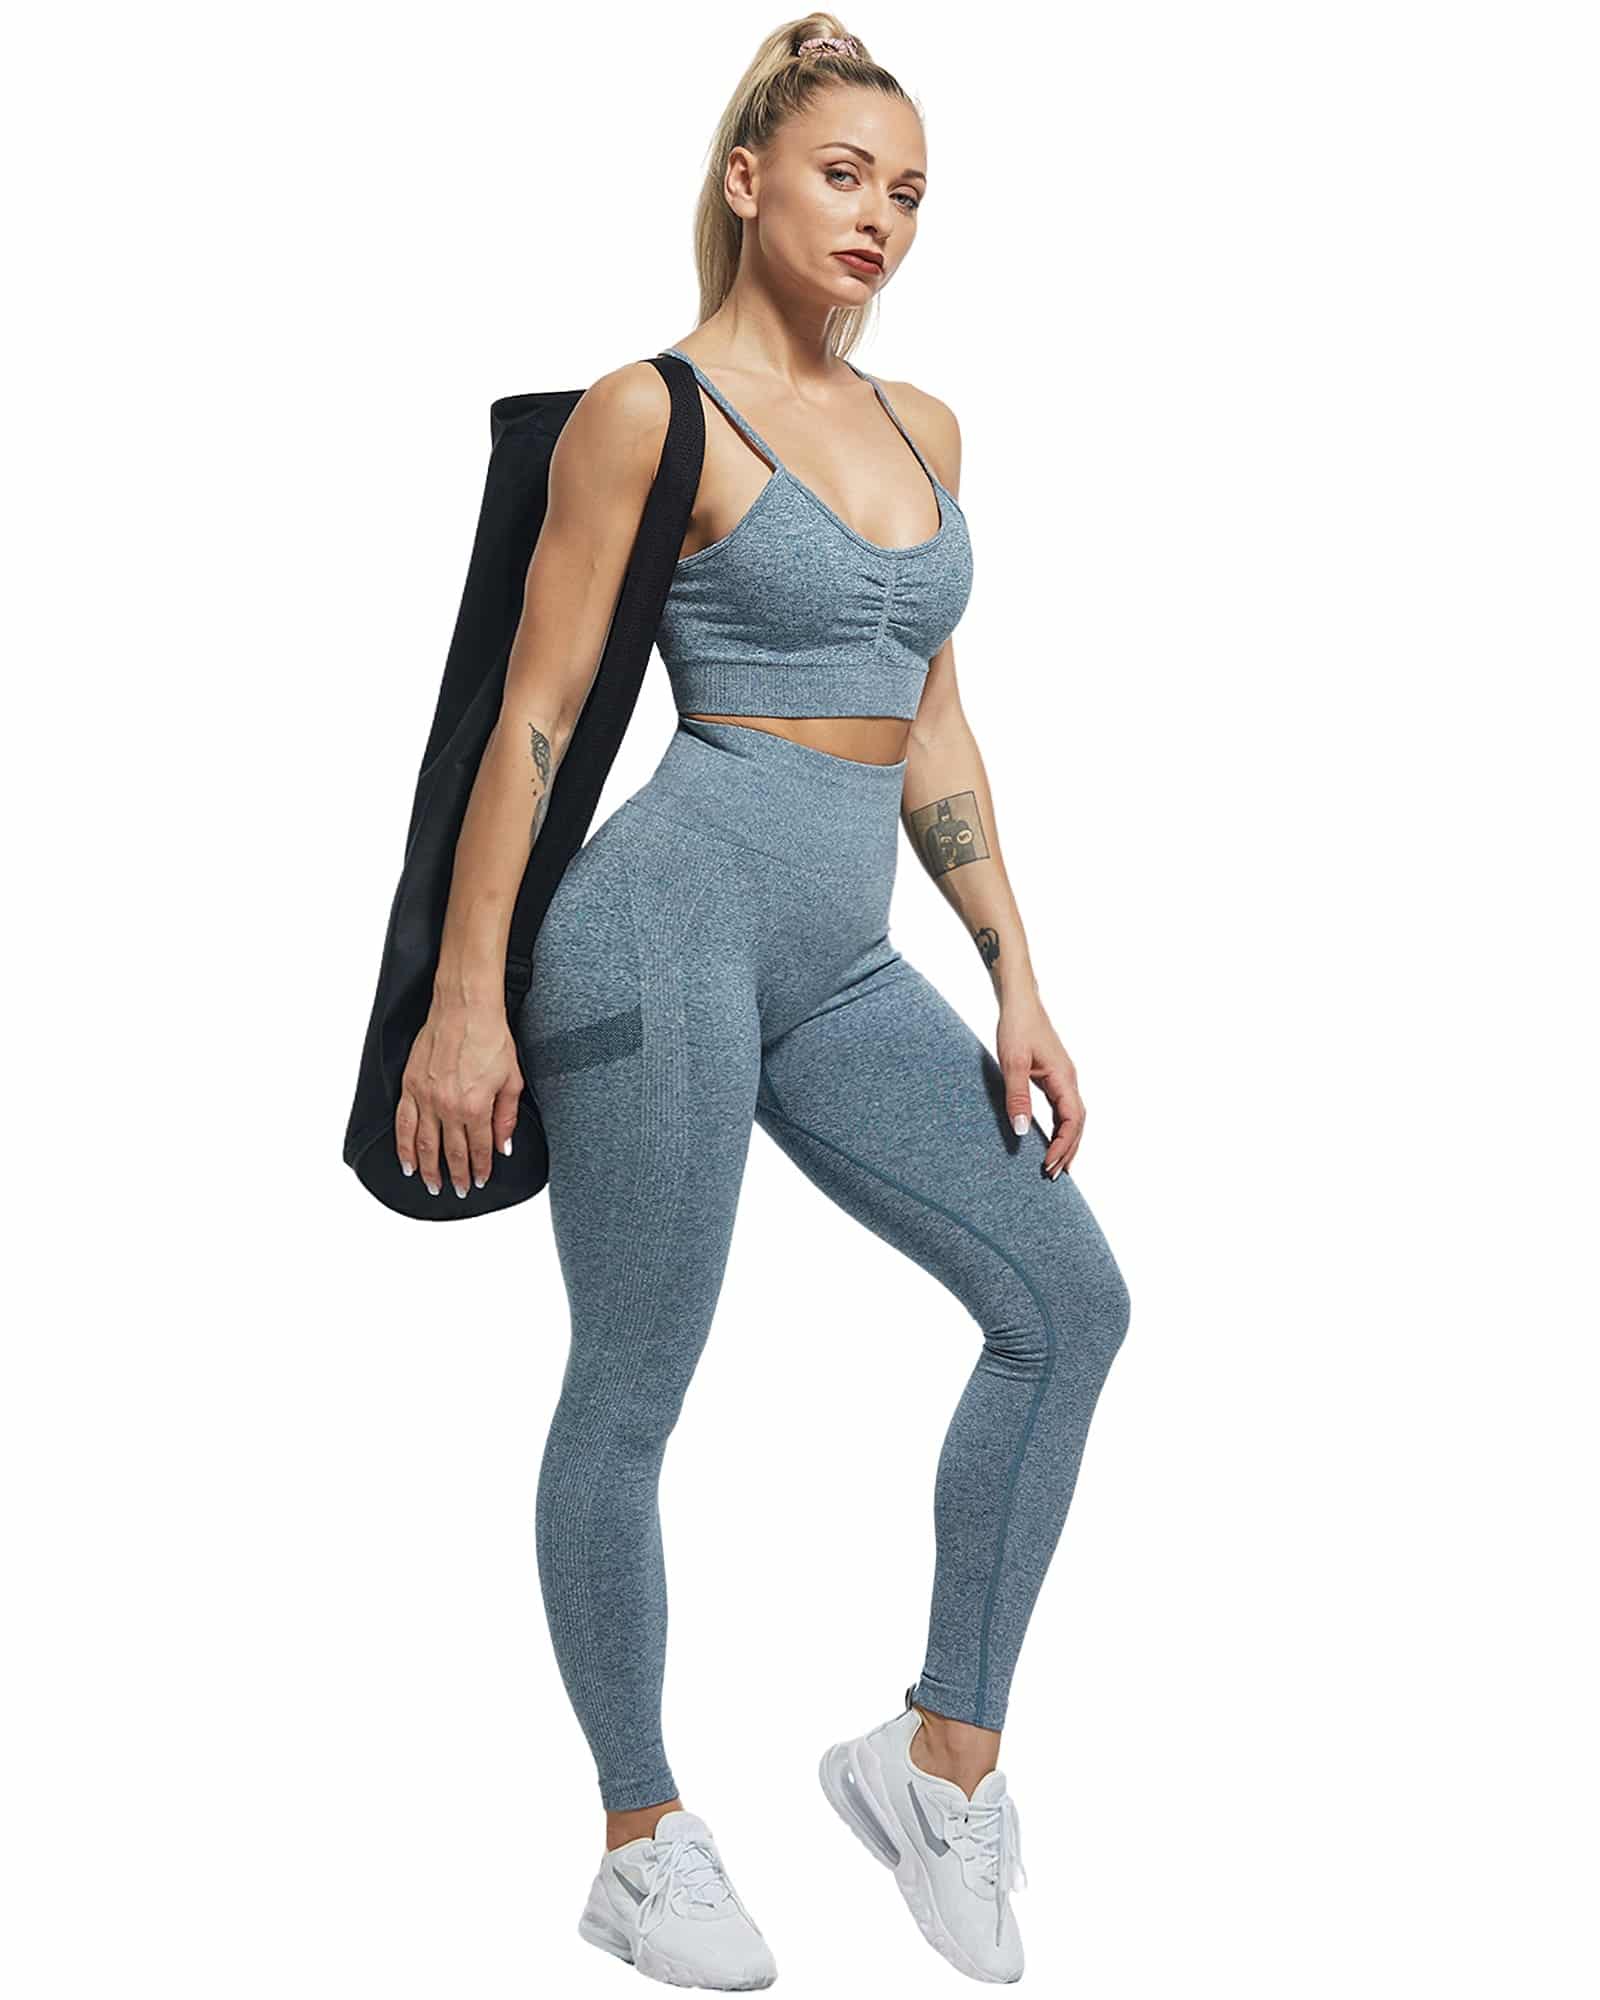 LZYVOO Sport Leggings Women Yoga Pants Tights Seamless Fitness Leggings Gym Clothing Push Up High Waist Workout Pants